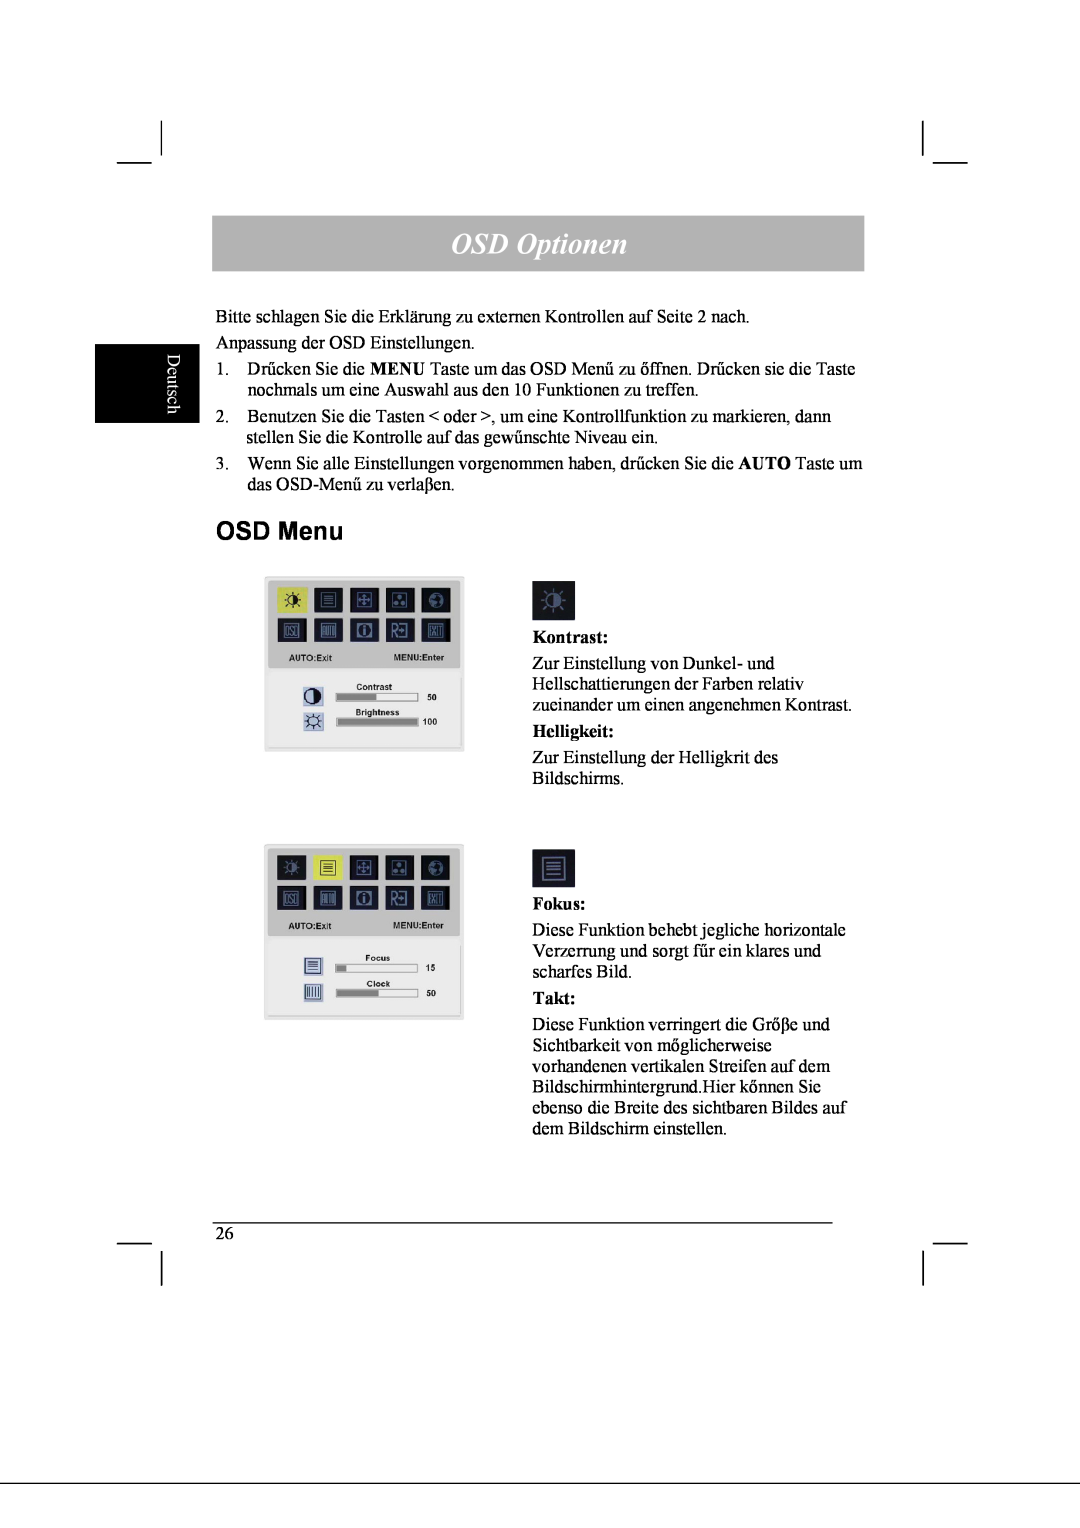 Acer AL2021 manual OSD Optionen, OSD Menu, Deutsch, Kontrast, Helligkeit, Fokus, Takt 